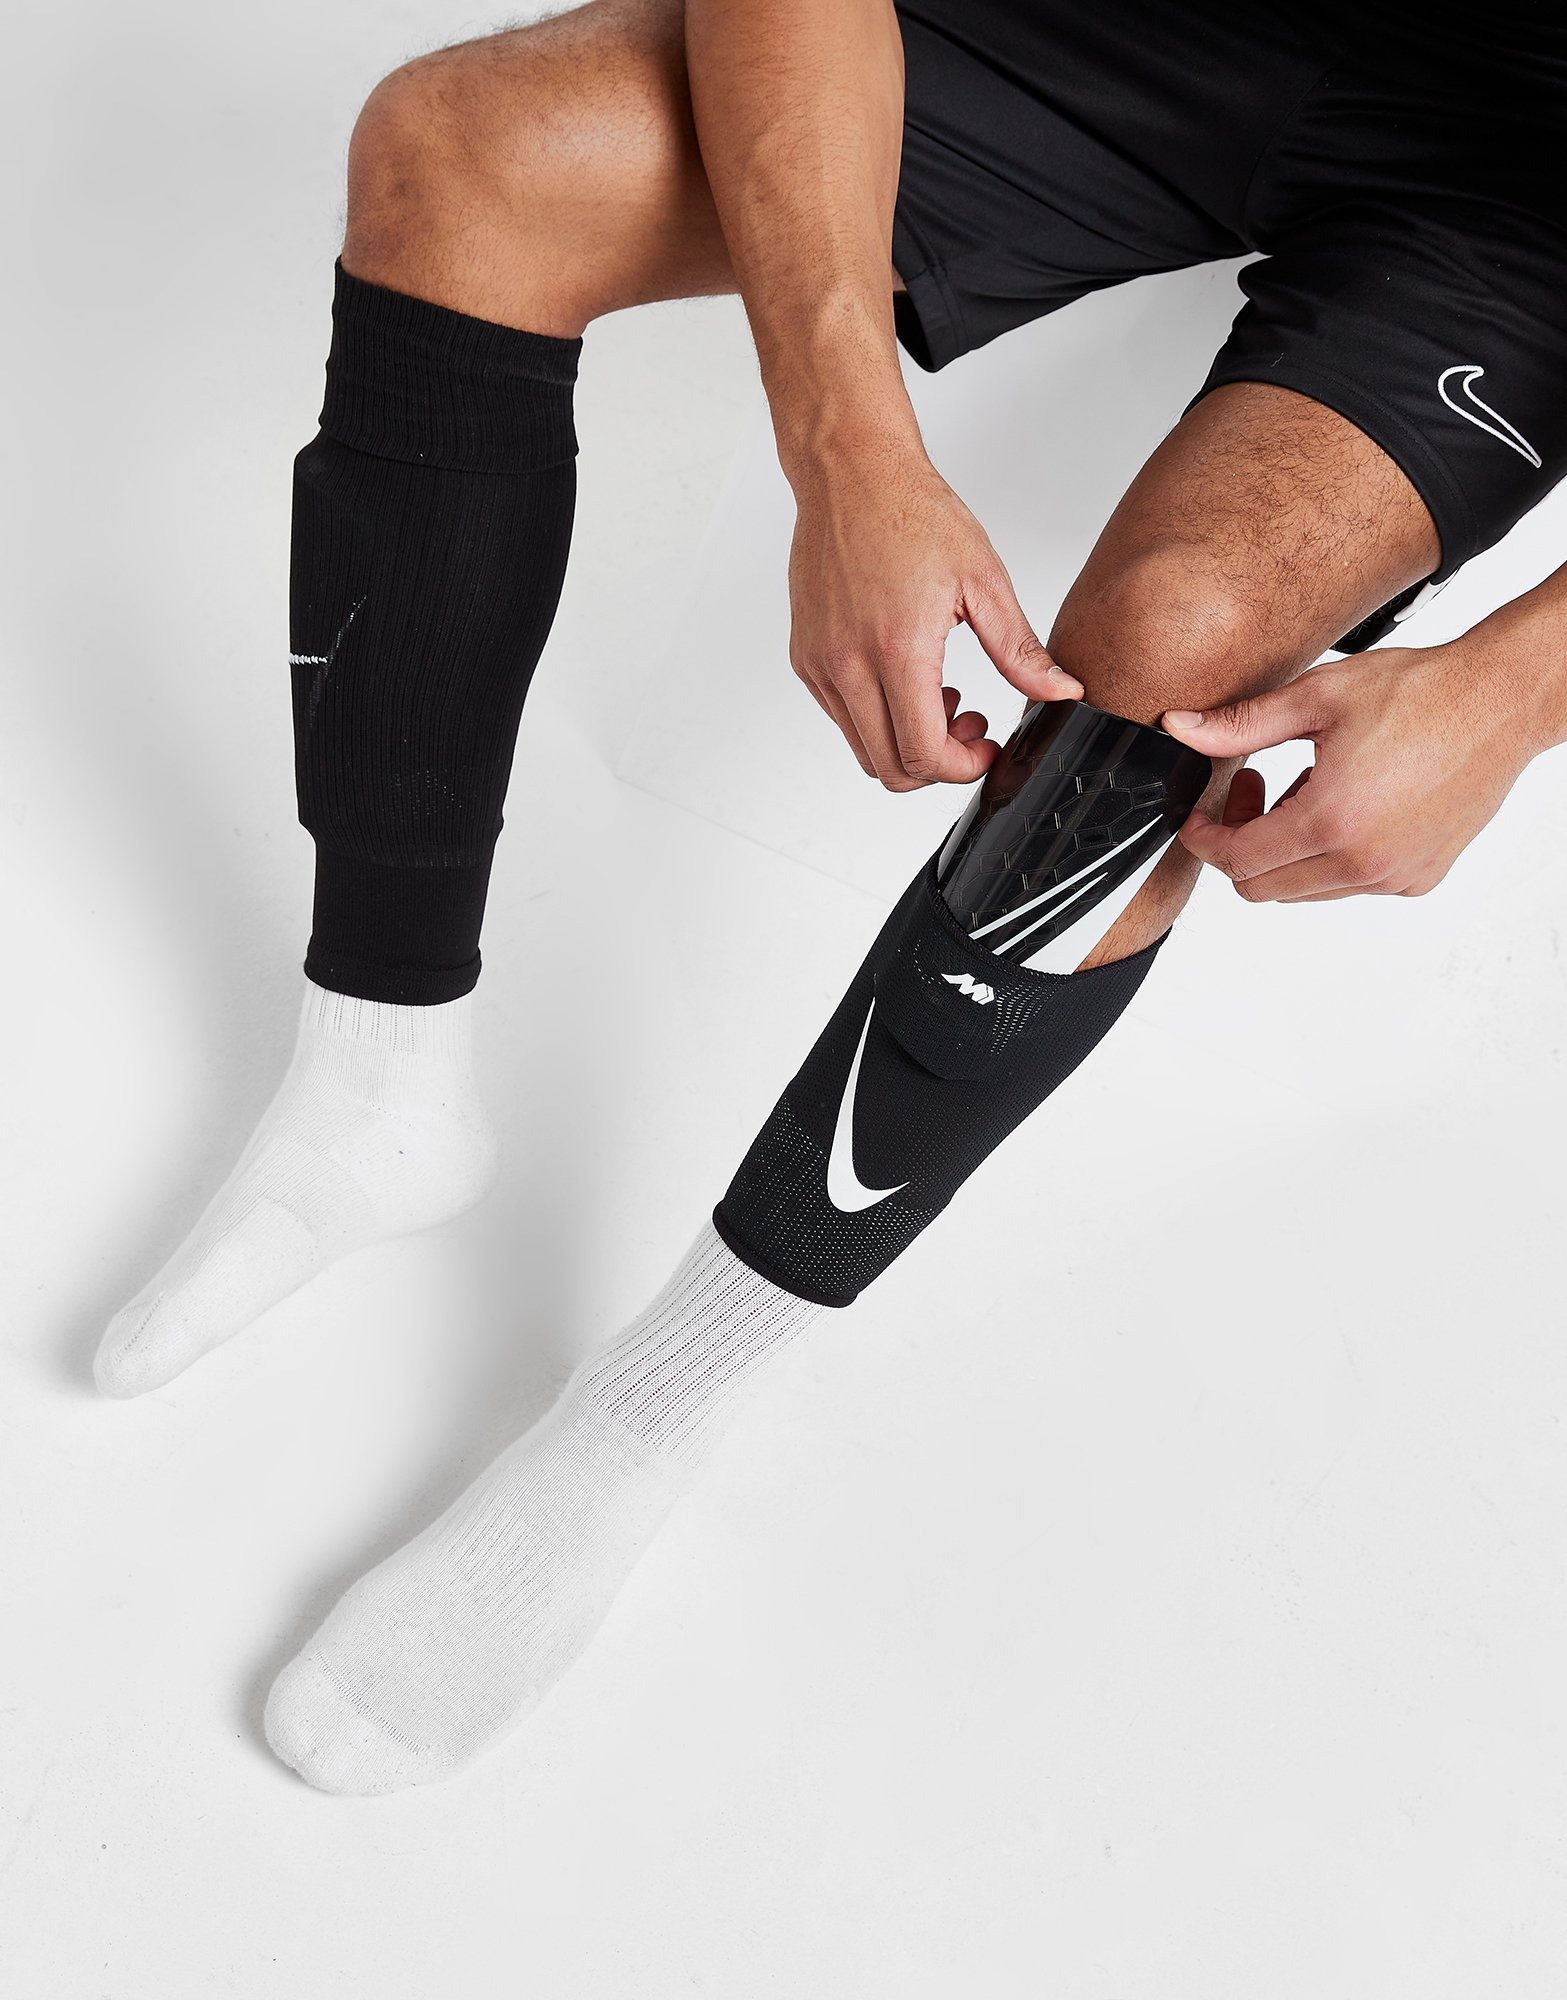 Ingenieria impaciente probable Nike espinilleras Mercurial Lite en Negro | JD Sports España